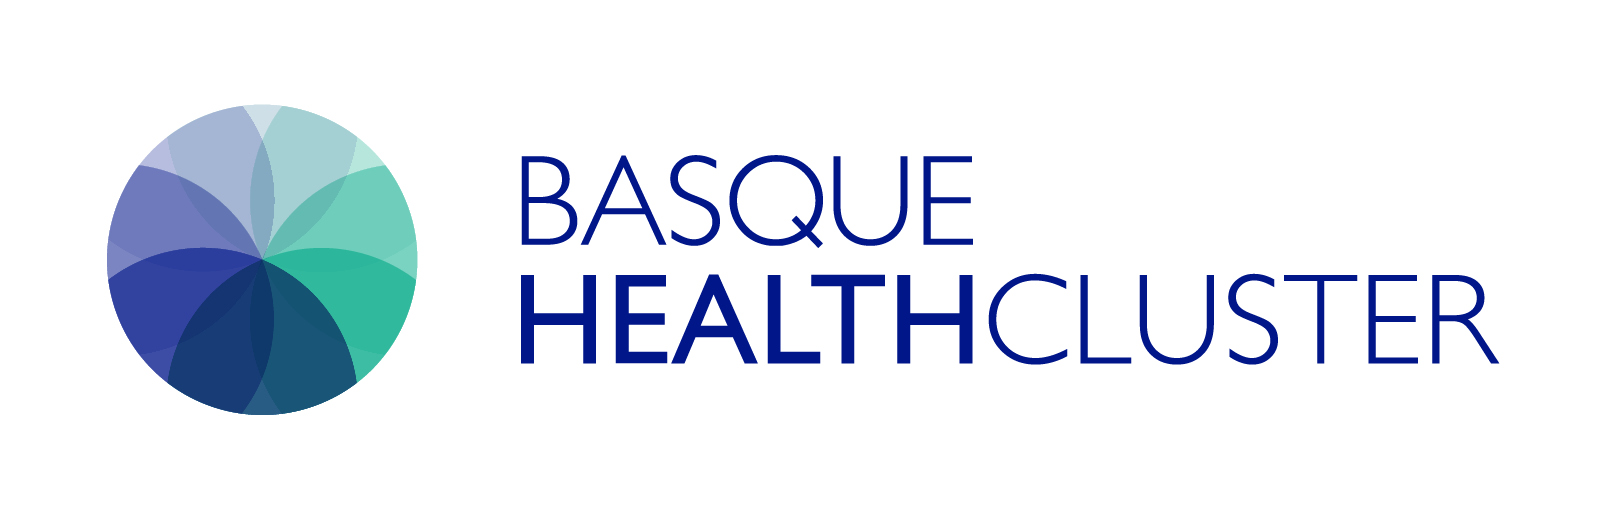 Basque Health Cluster_logo.jpg